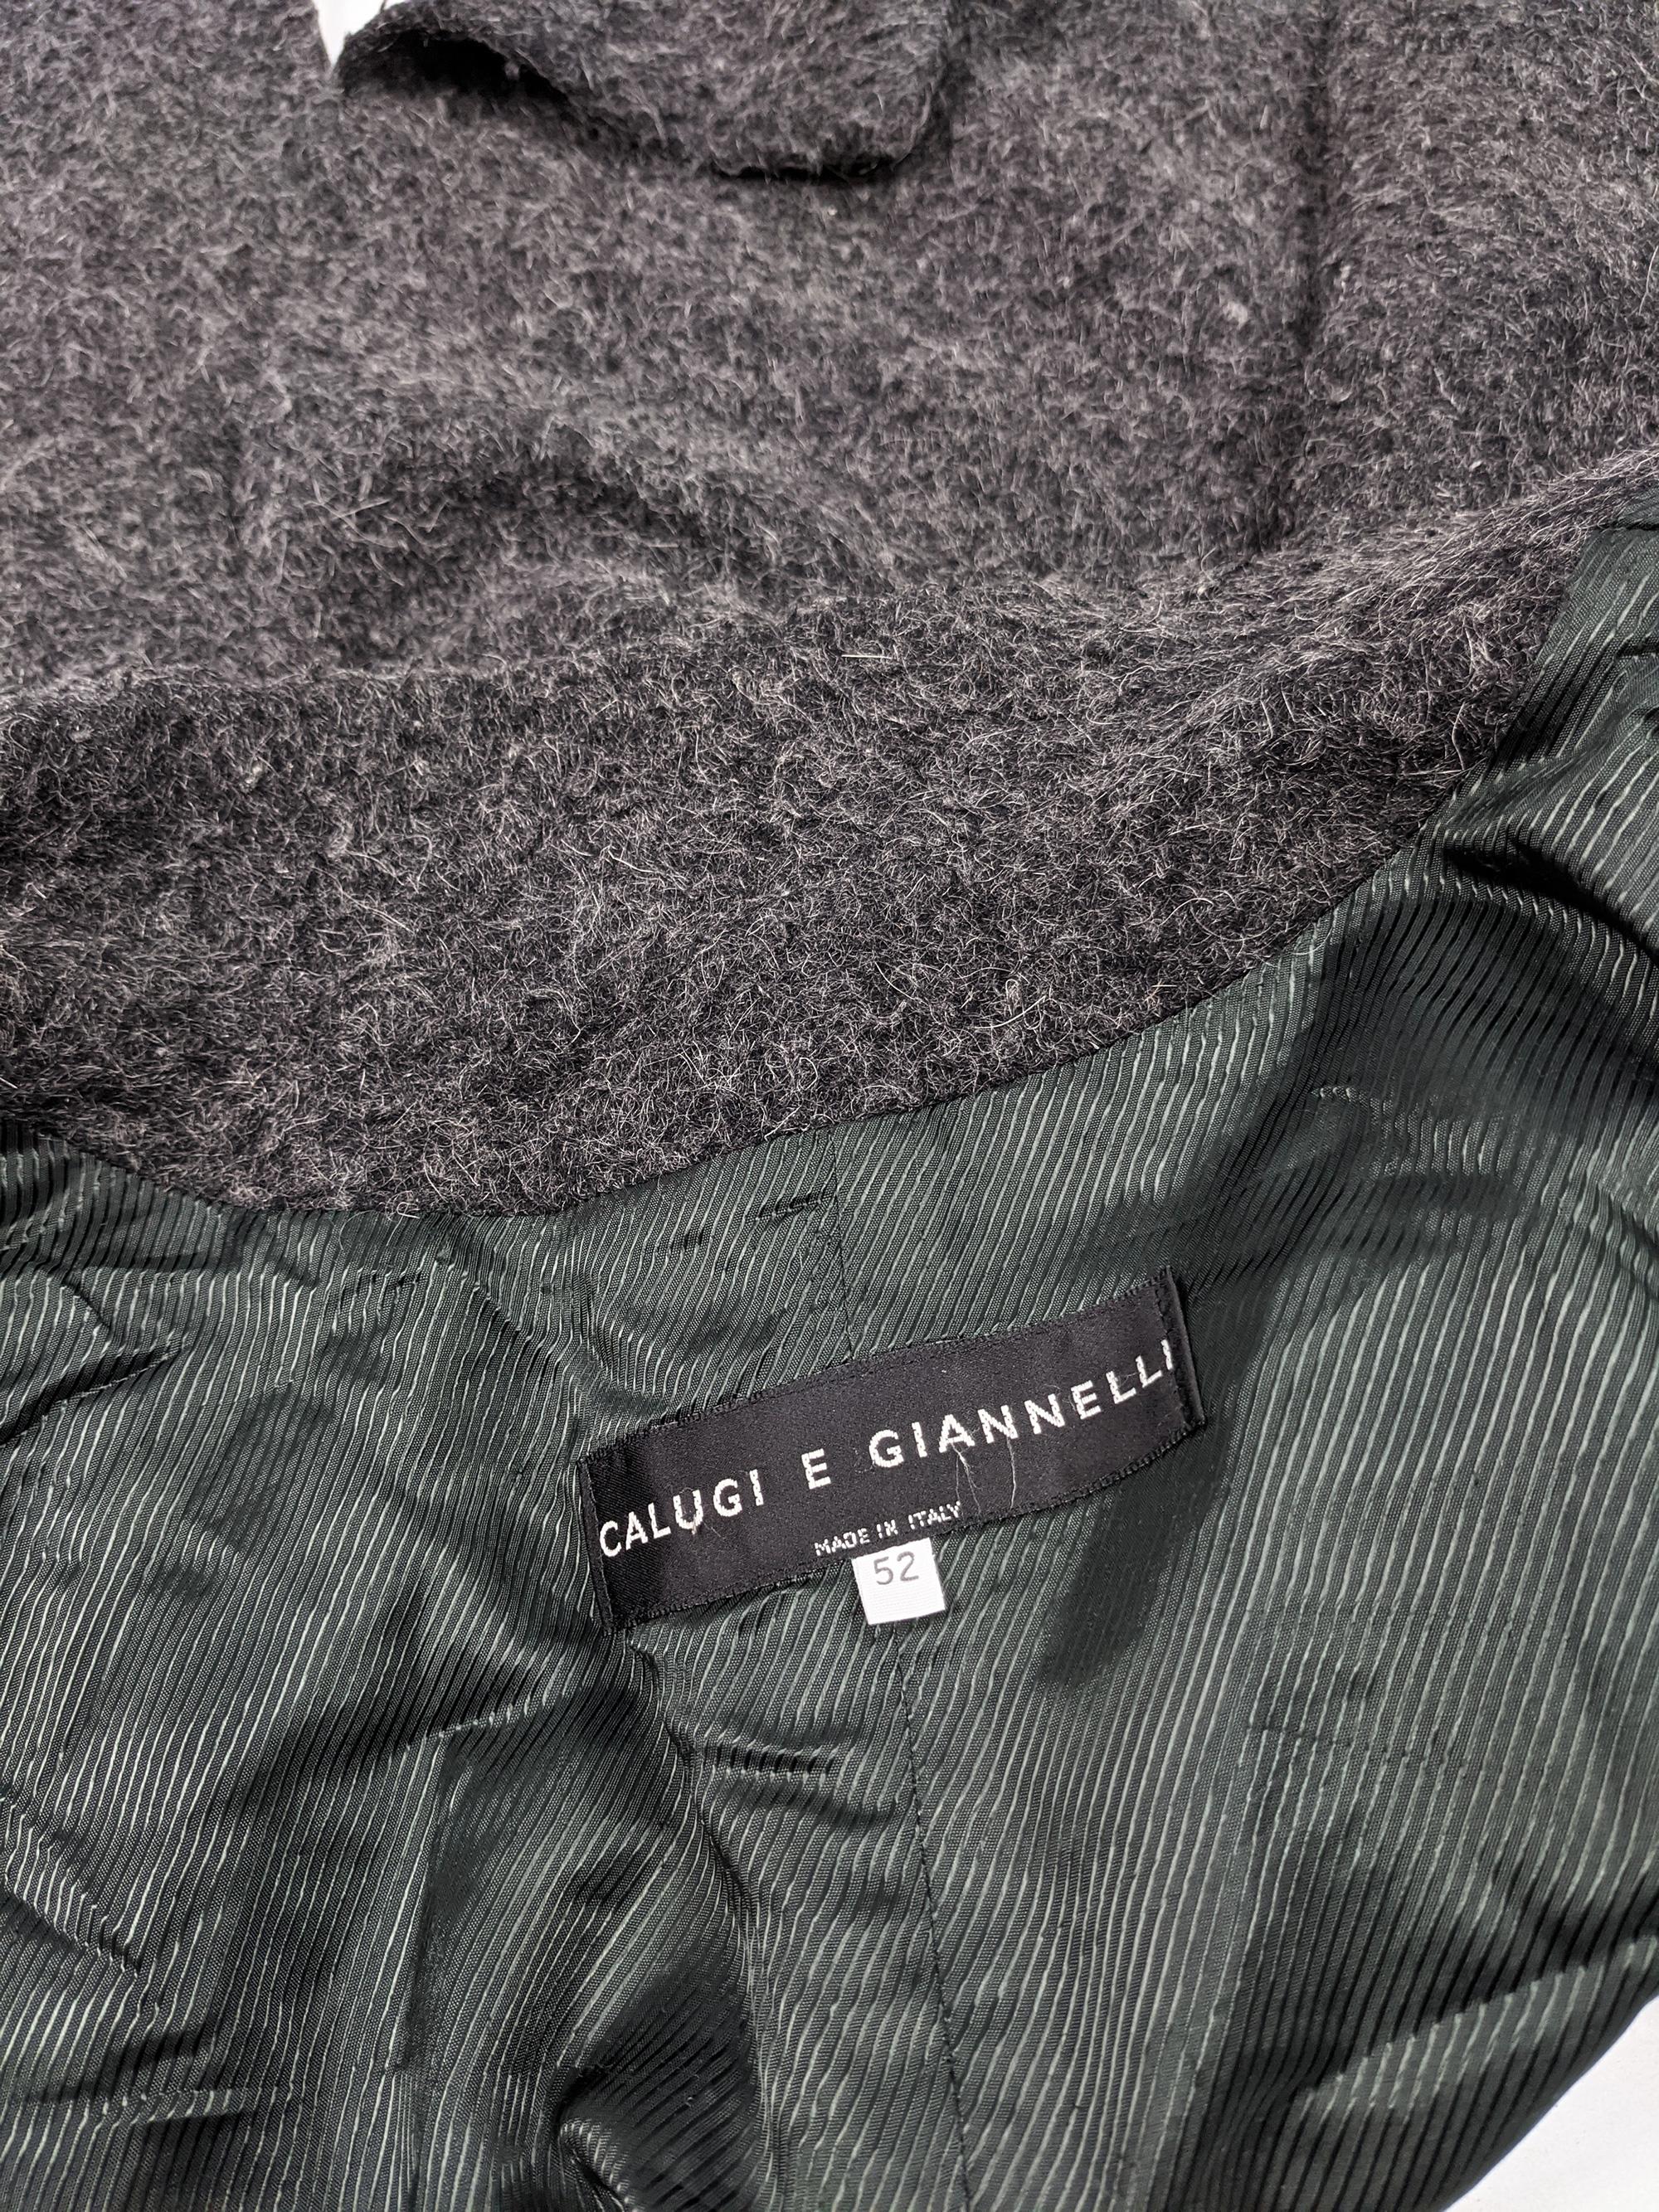 Calugi e Giannelli Vintage Mens Grey Boucle Tweed Jacket For Sale 3